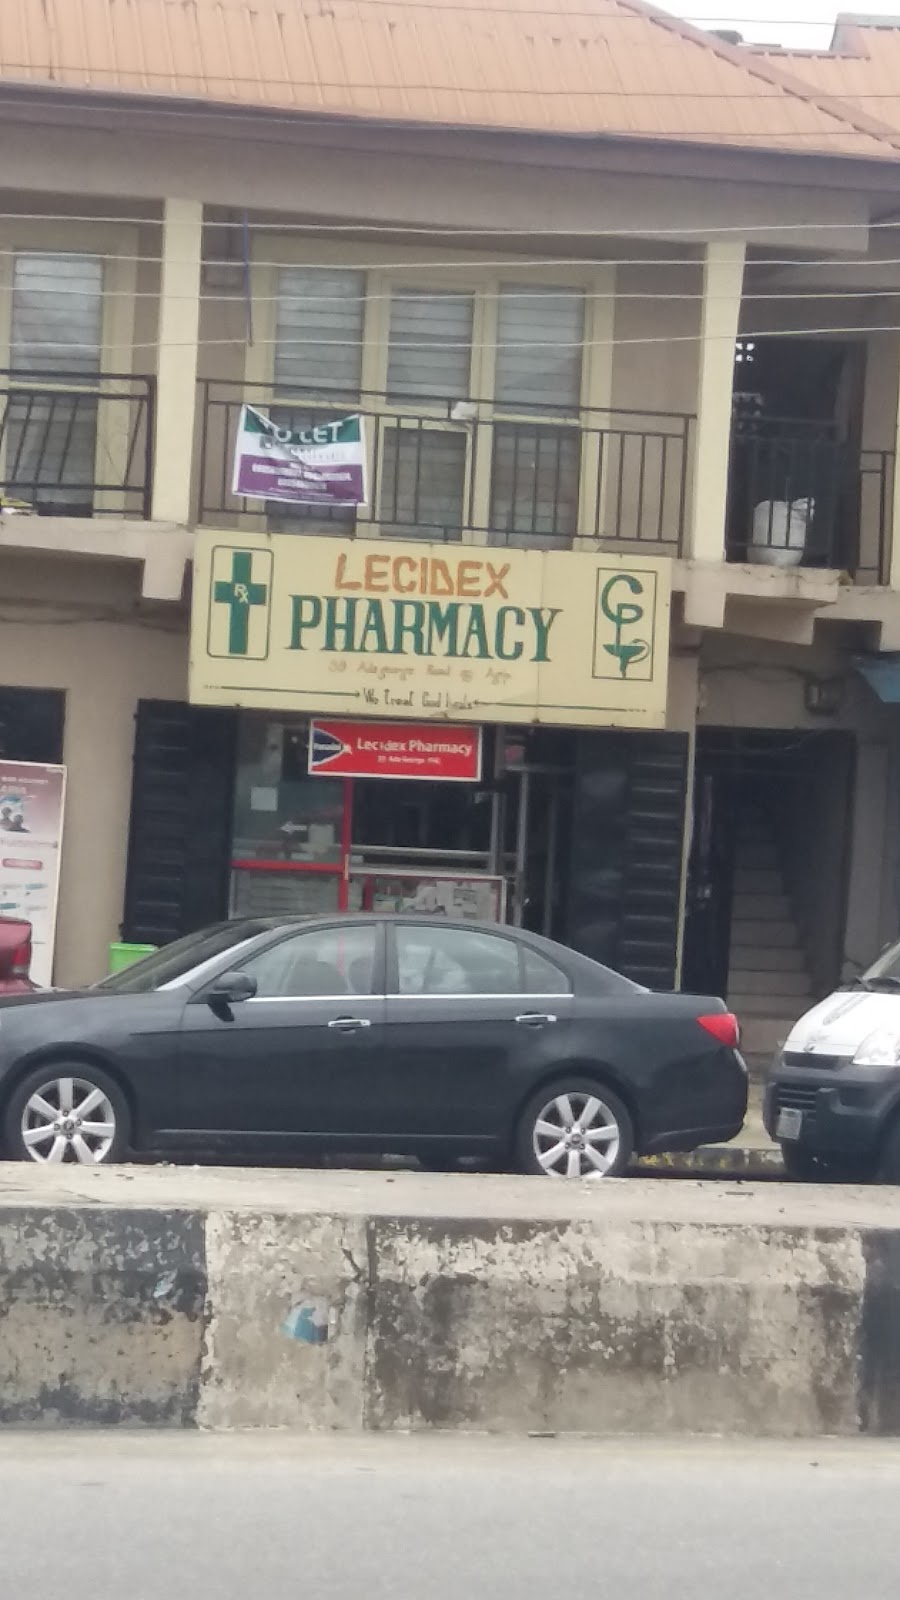 Lecidex Pharmacy